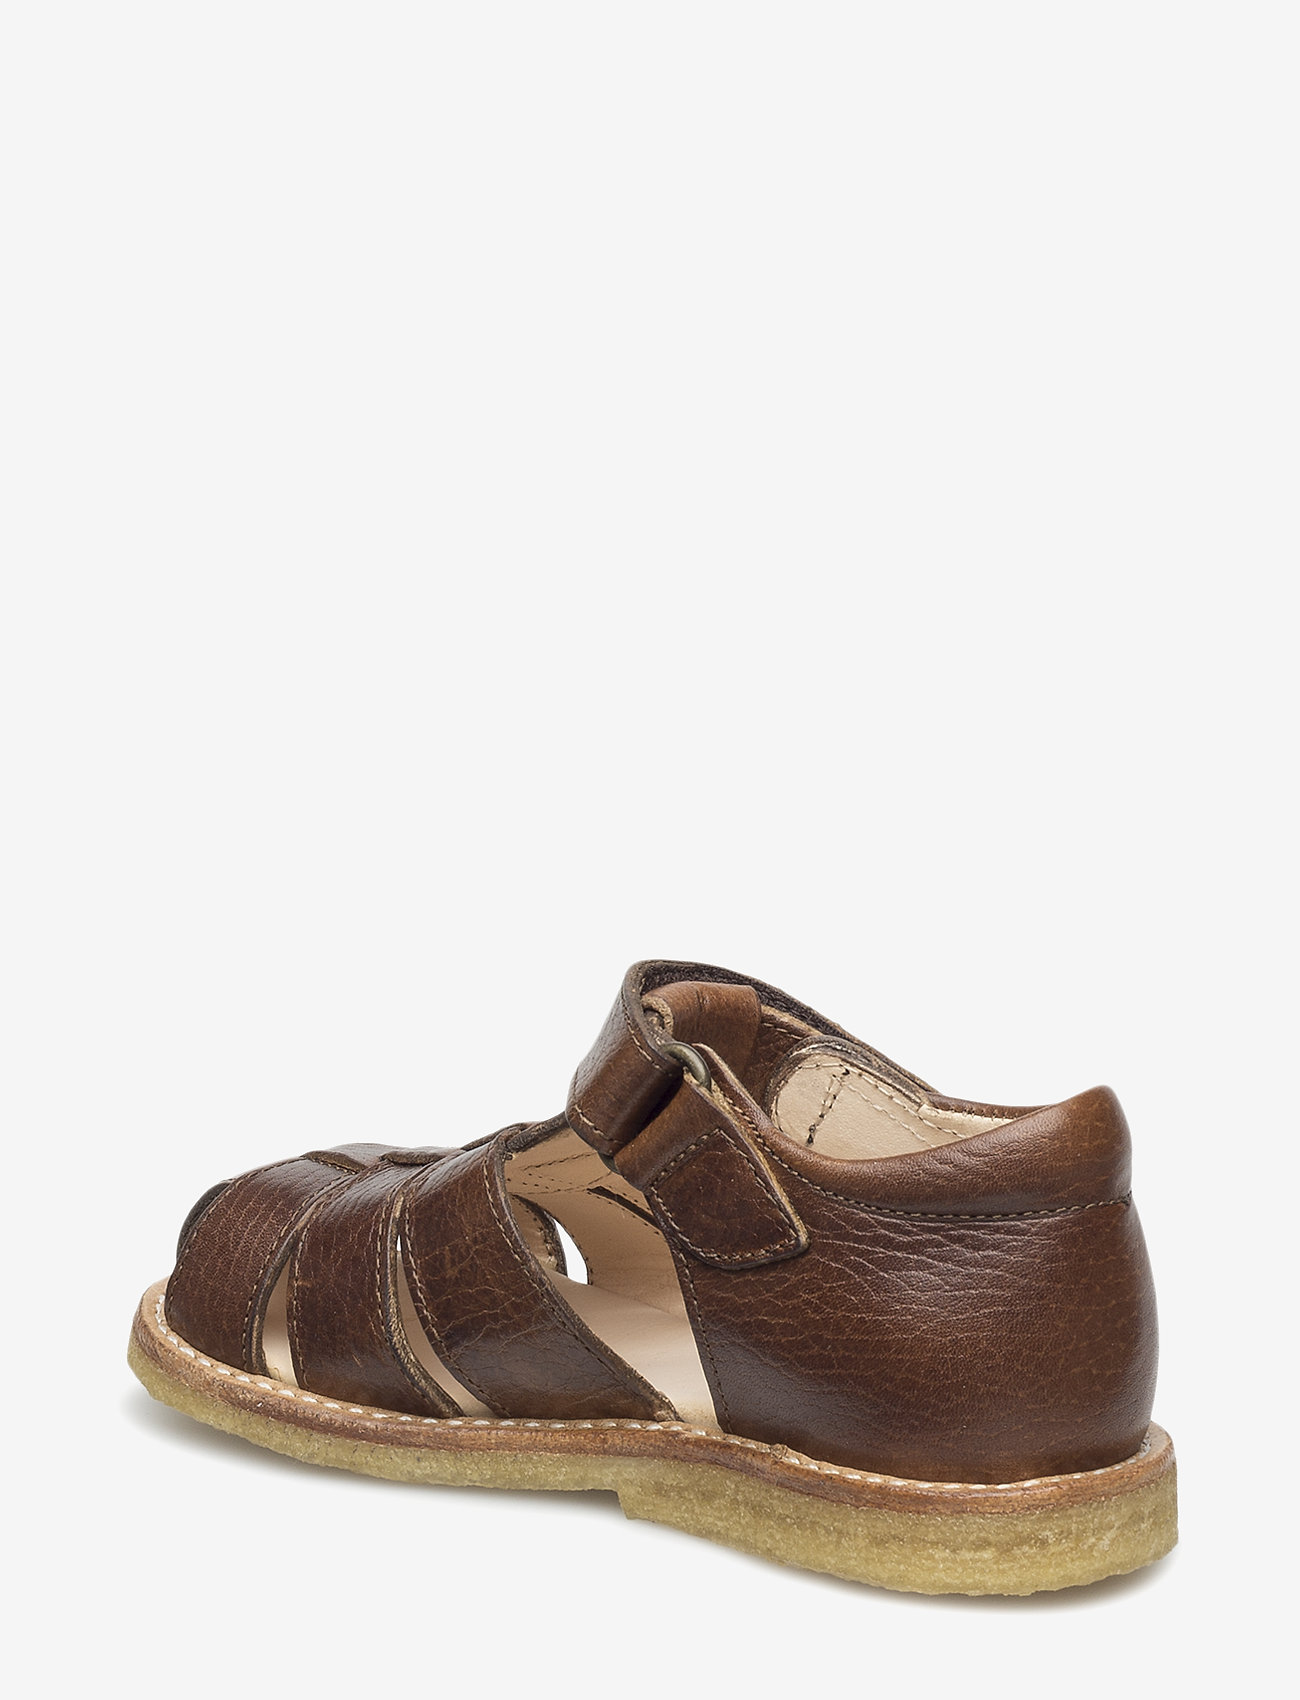 ANGULUS - Sandals - flat - closed toe -  - strap sandals - 2509 cognac - 1